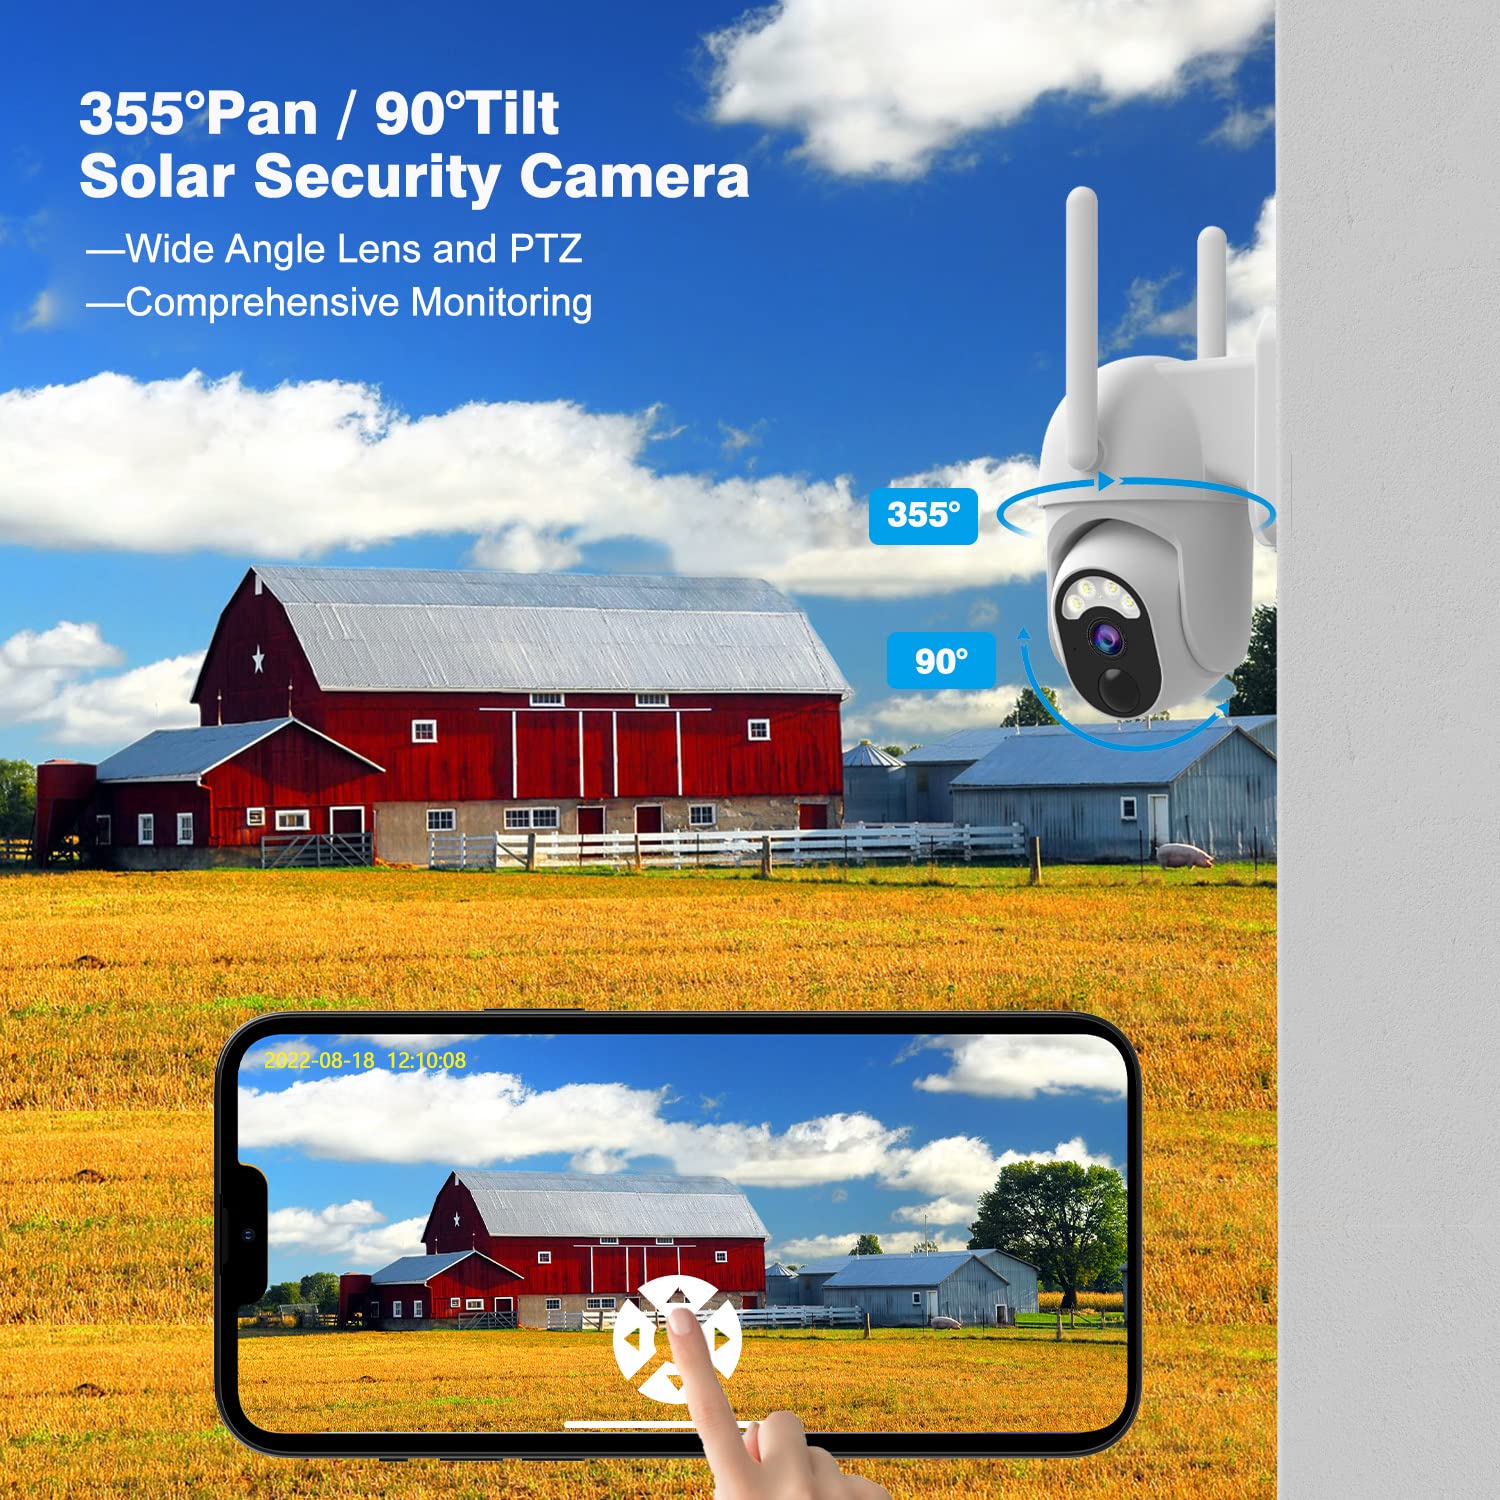 Soliom PT S40 3G/4G LTE Outdoor Cellular Solar Security Cameras with SIM Card, 1080p Night Vision, No WiFi